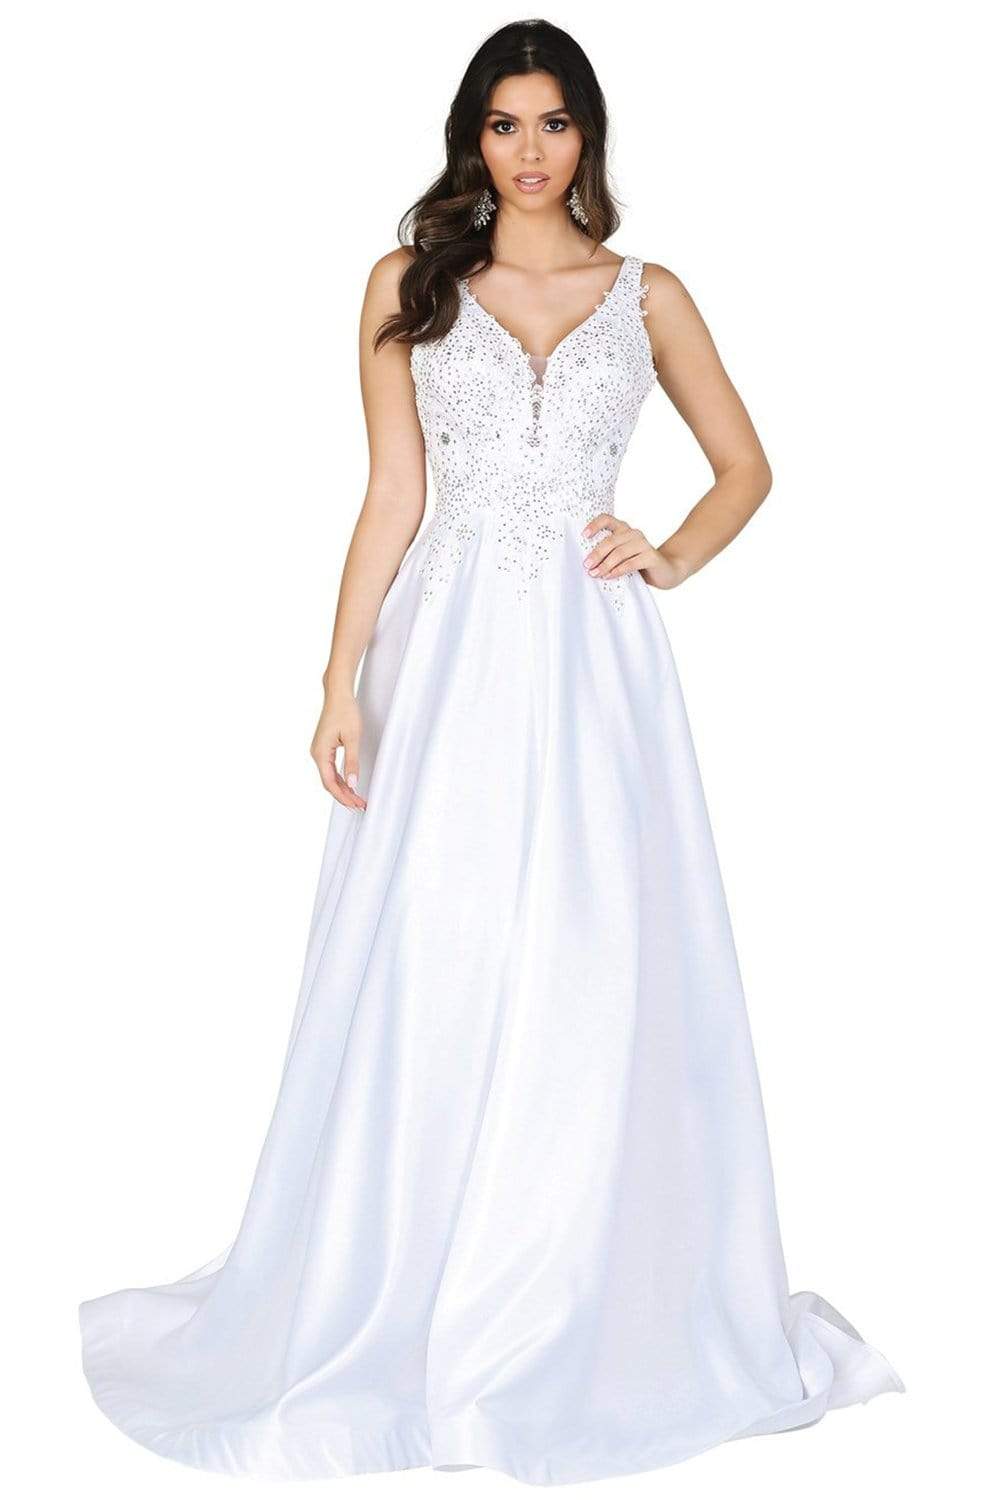 Dancing Queen - 139 Embellished Plunging V-Neck Wedding Gown
